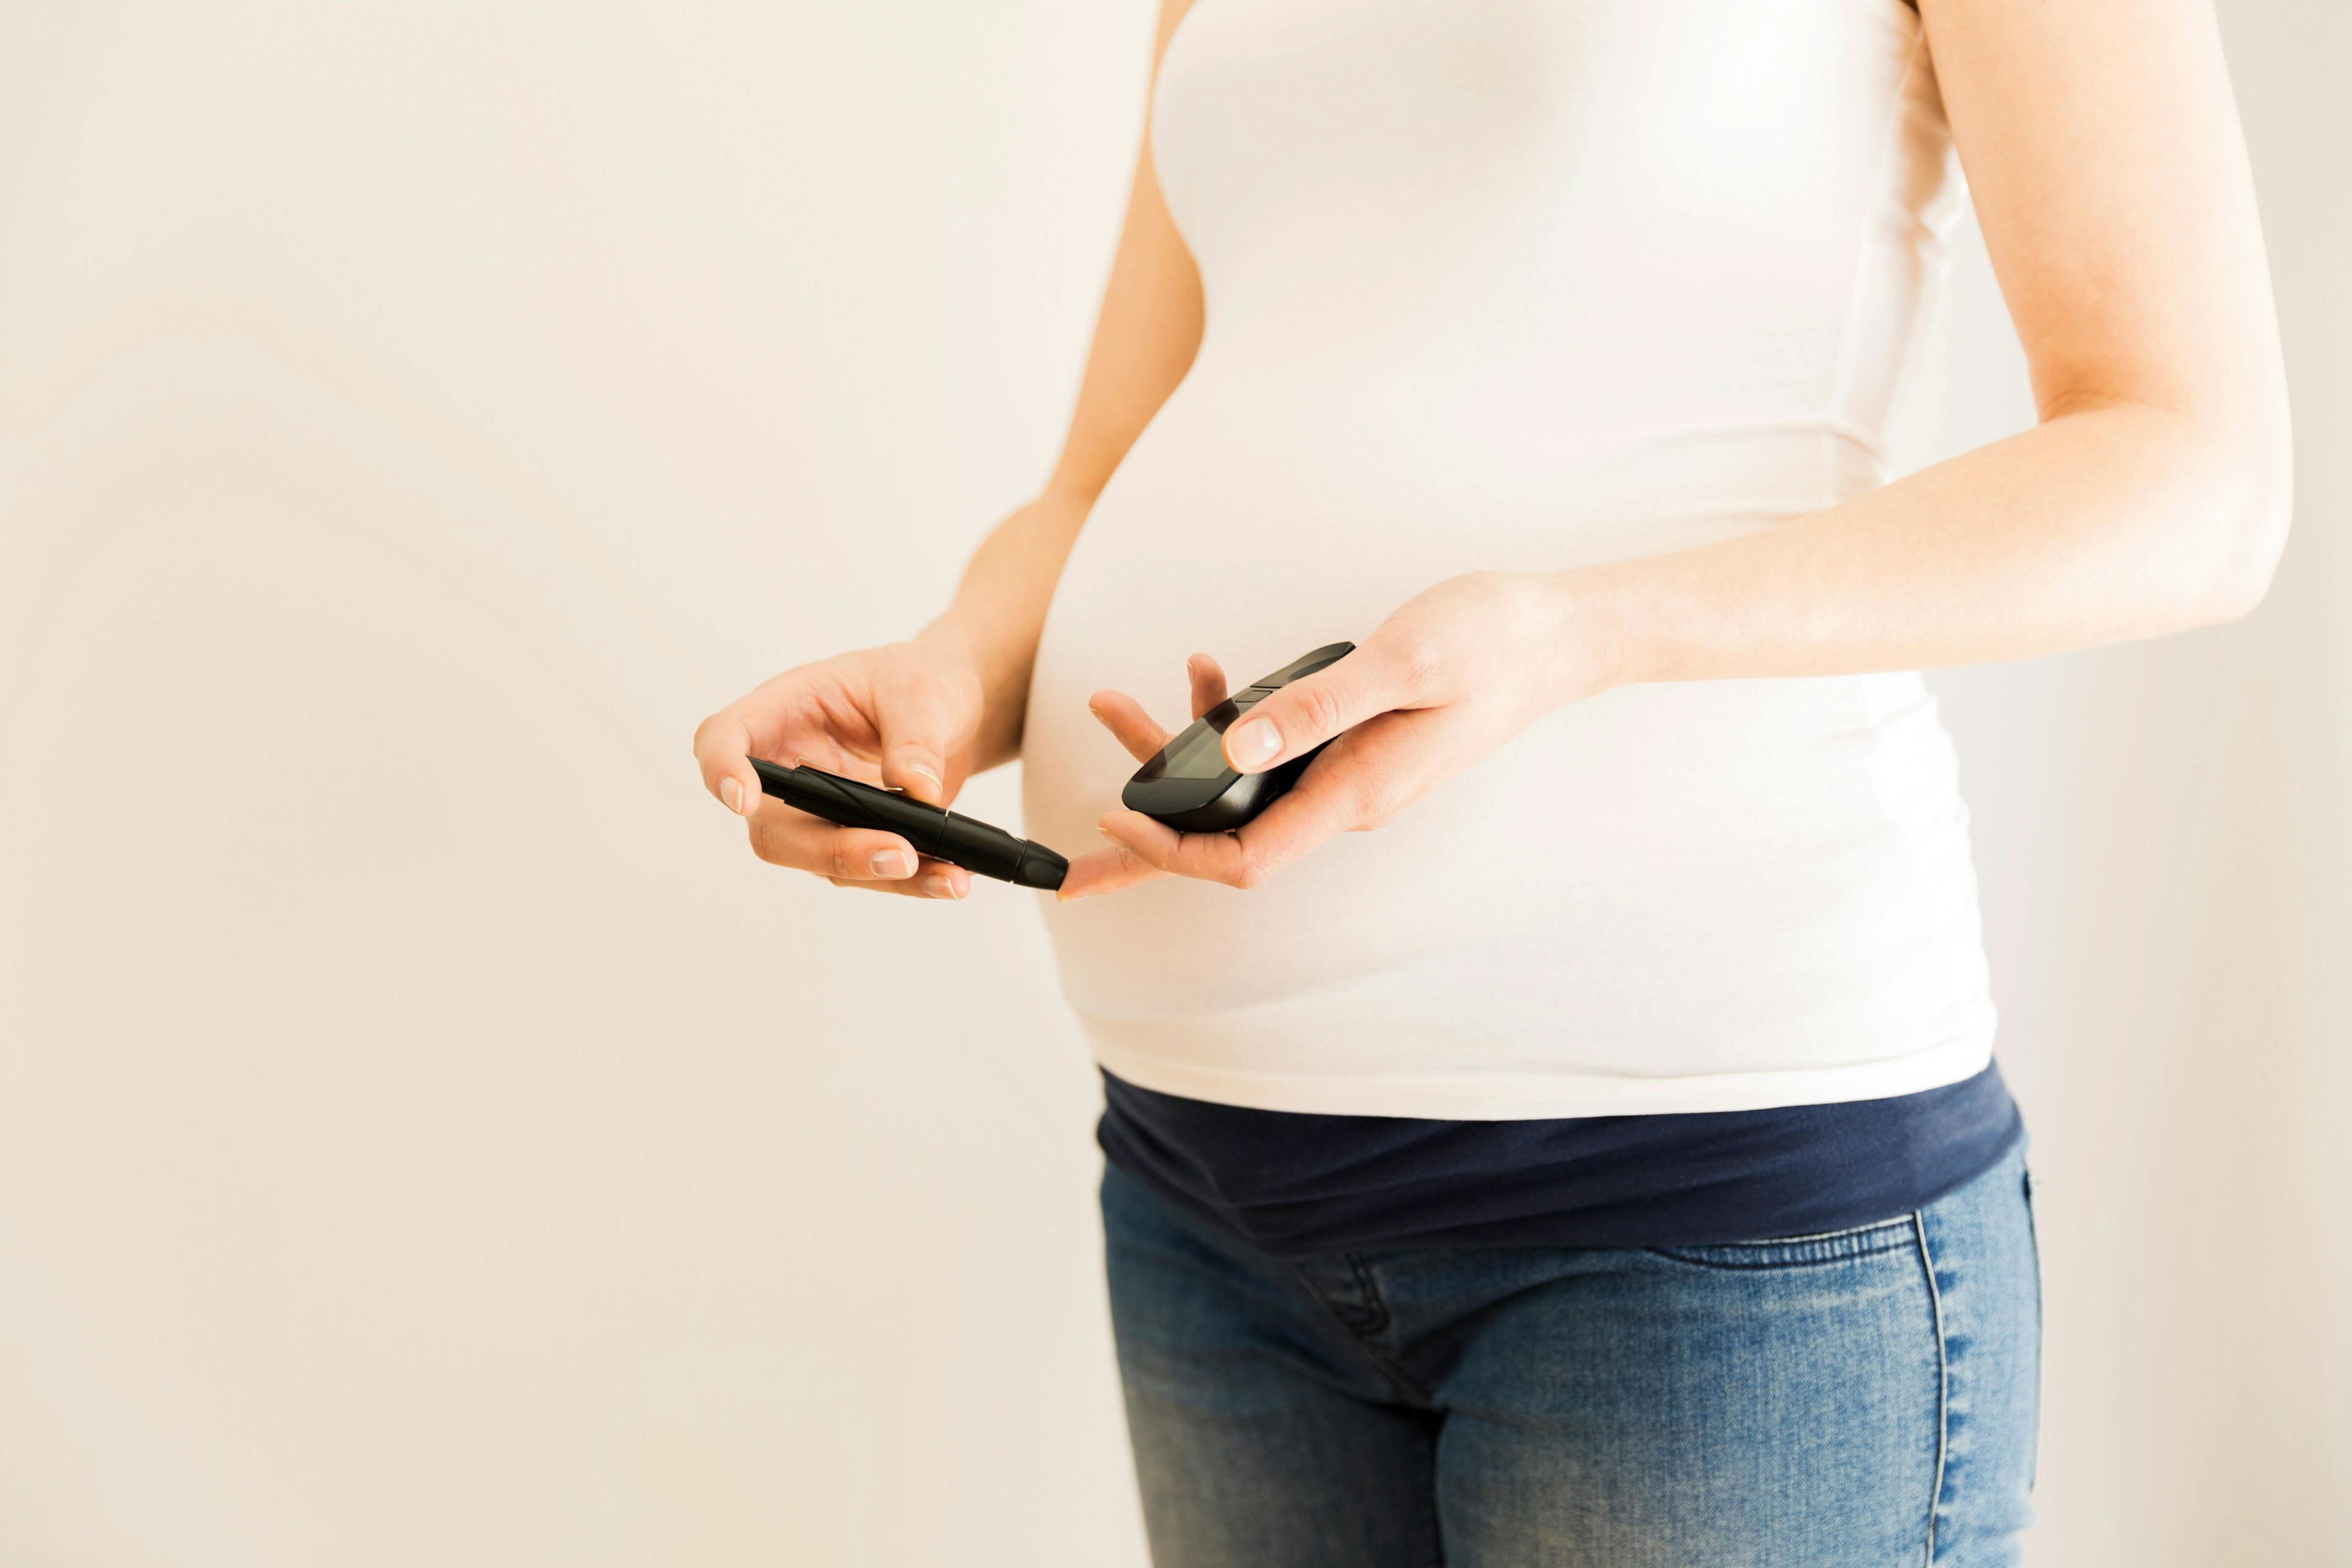 Pregnant woman checking blood sugar level. Gestational diabetes. Pregnancy health